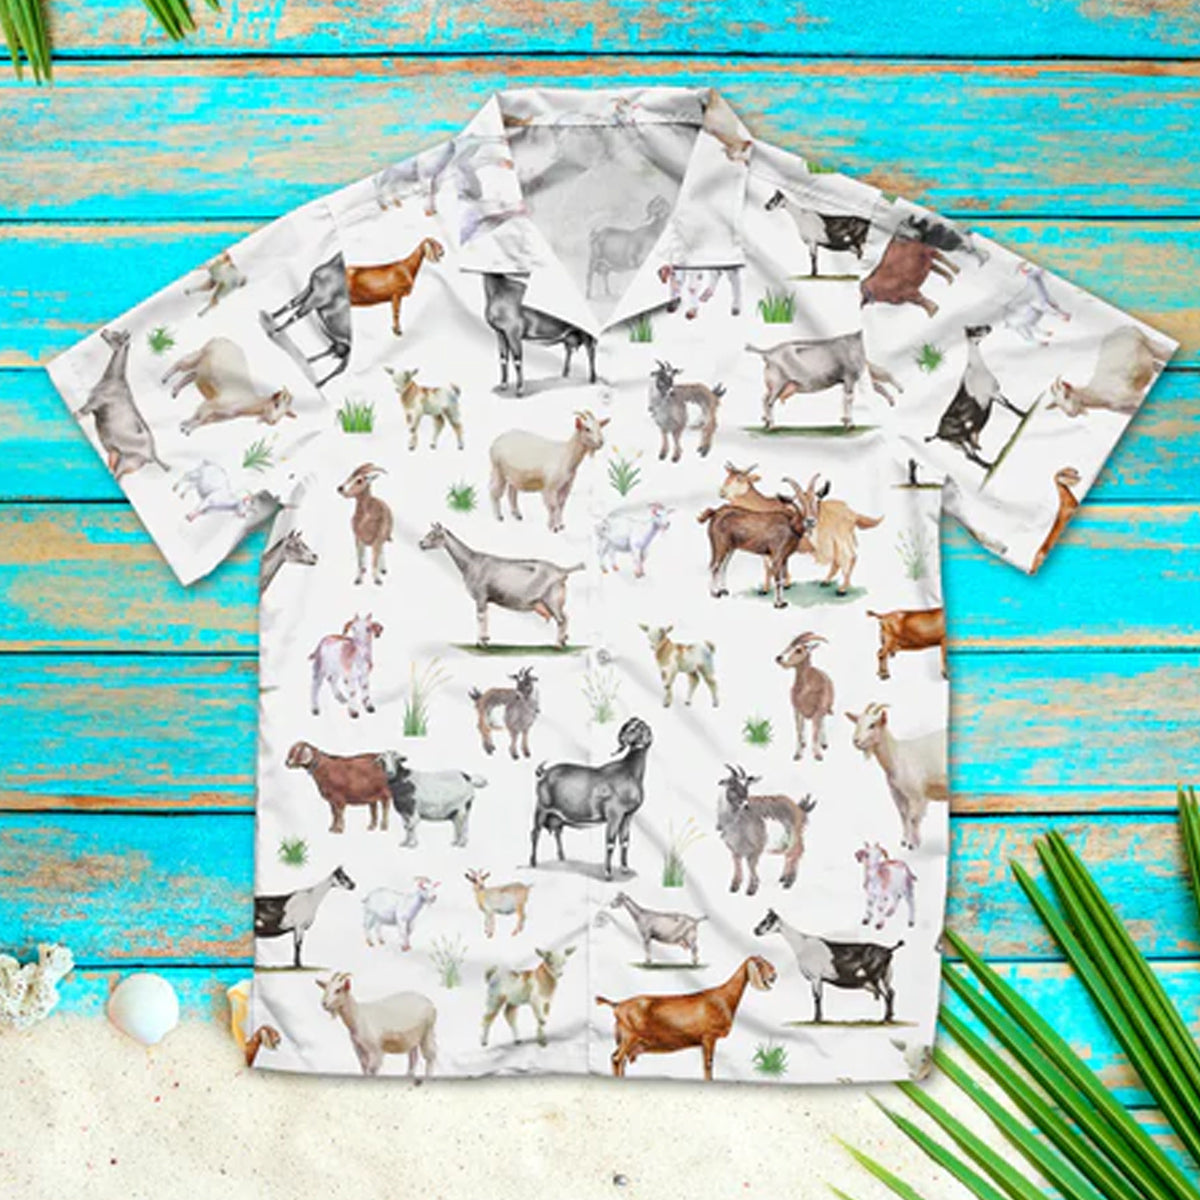 Goat painting pattern Hawaiian Shirt/ Summer Hawaiian Shirts for Men and Women Aloha Beach Shirt